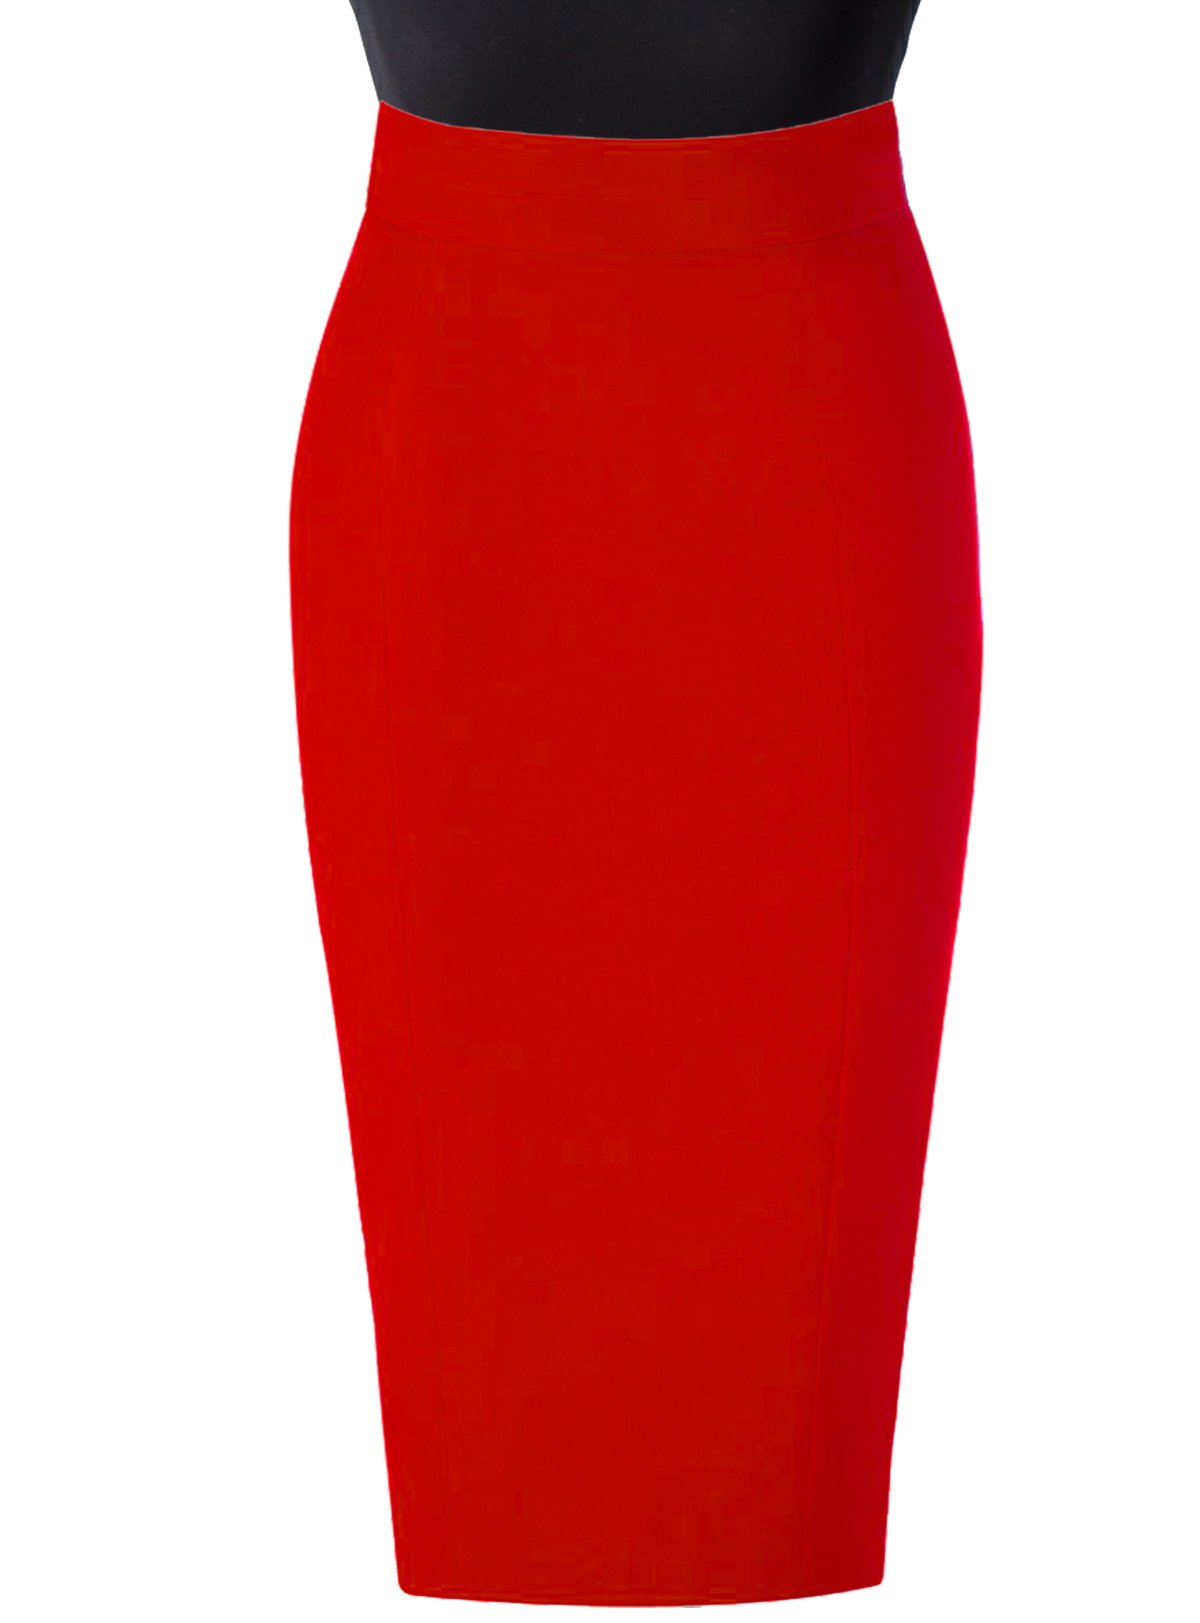 High Waist Bright Tangerine Pencil Skirt, Custom Handmade, Fully Lined,  Linen / polyester Fabric